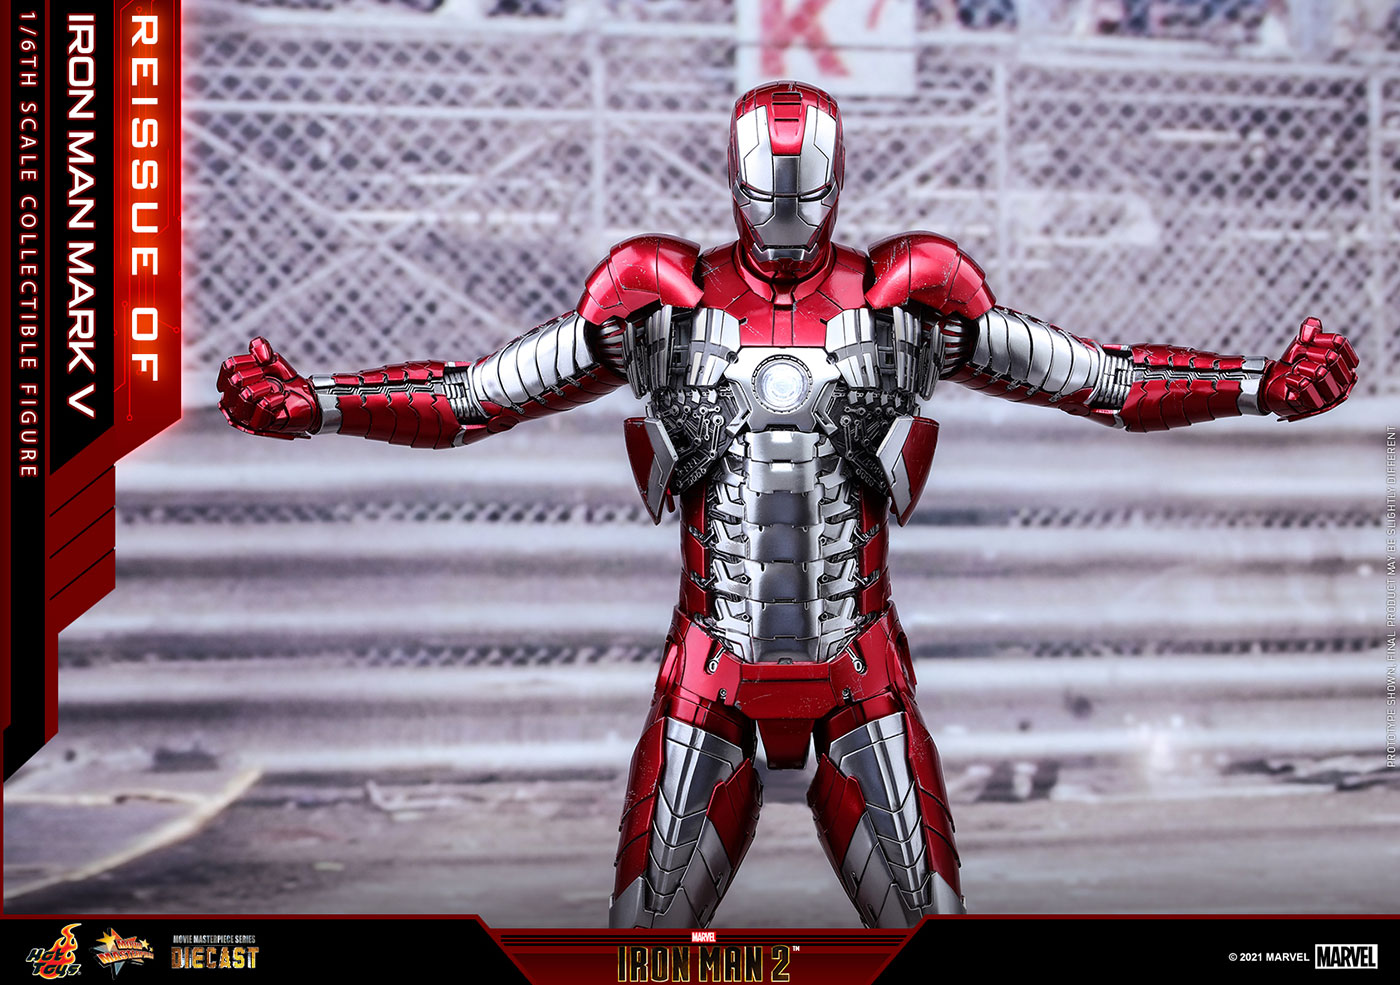 Iron Man 2: Iron Man Mark V - DieCast, 1/6 Figur ... https://spaceart.de/produkte/irm022-iron-man-mark-v-diecast-figur-hot-toys-mms400d18-907514-4895228607447-spaceart.php